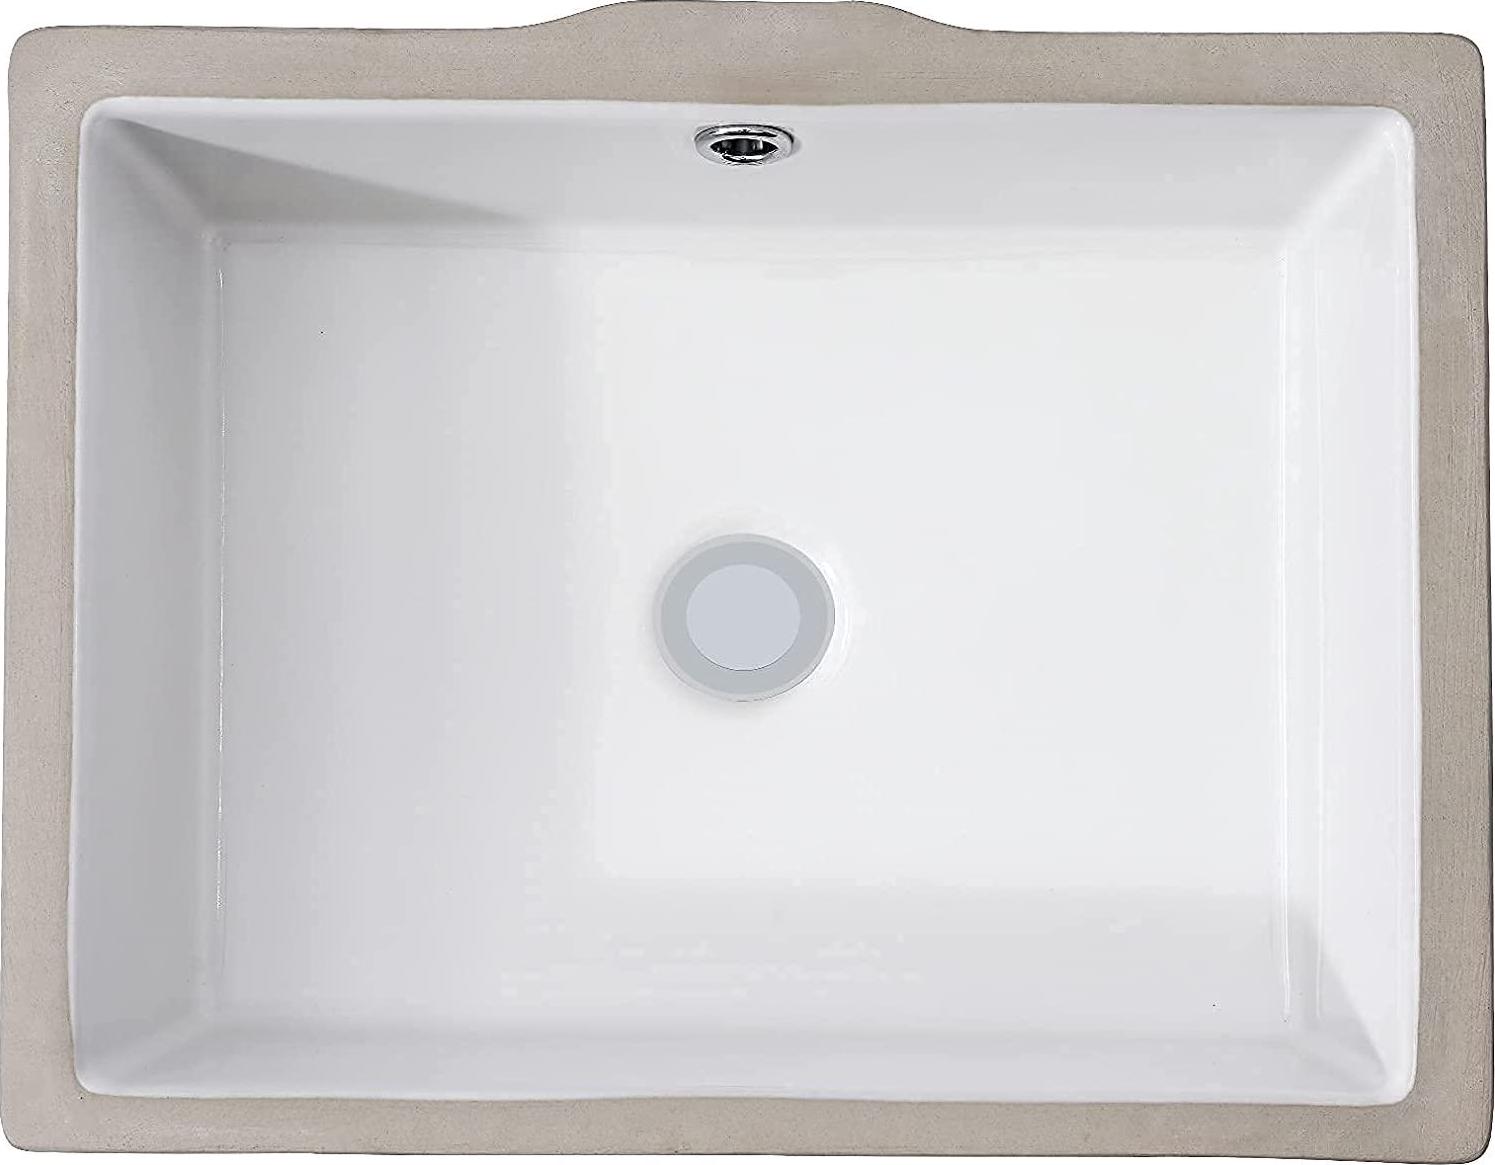 AMASHEN 16.8 x 13 Undermount Bathroom Sink White Rectangular Porcelain Ceramic Vanity Basin with Overflow